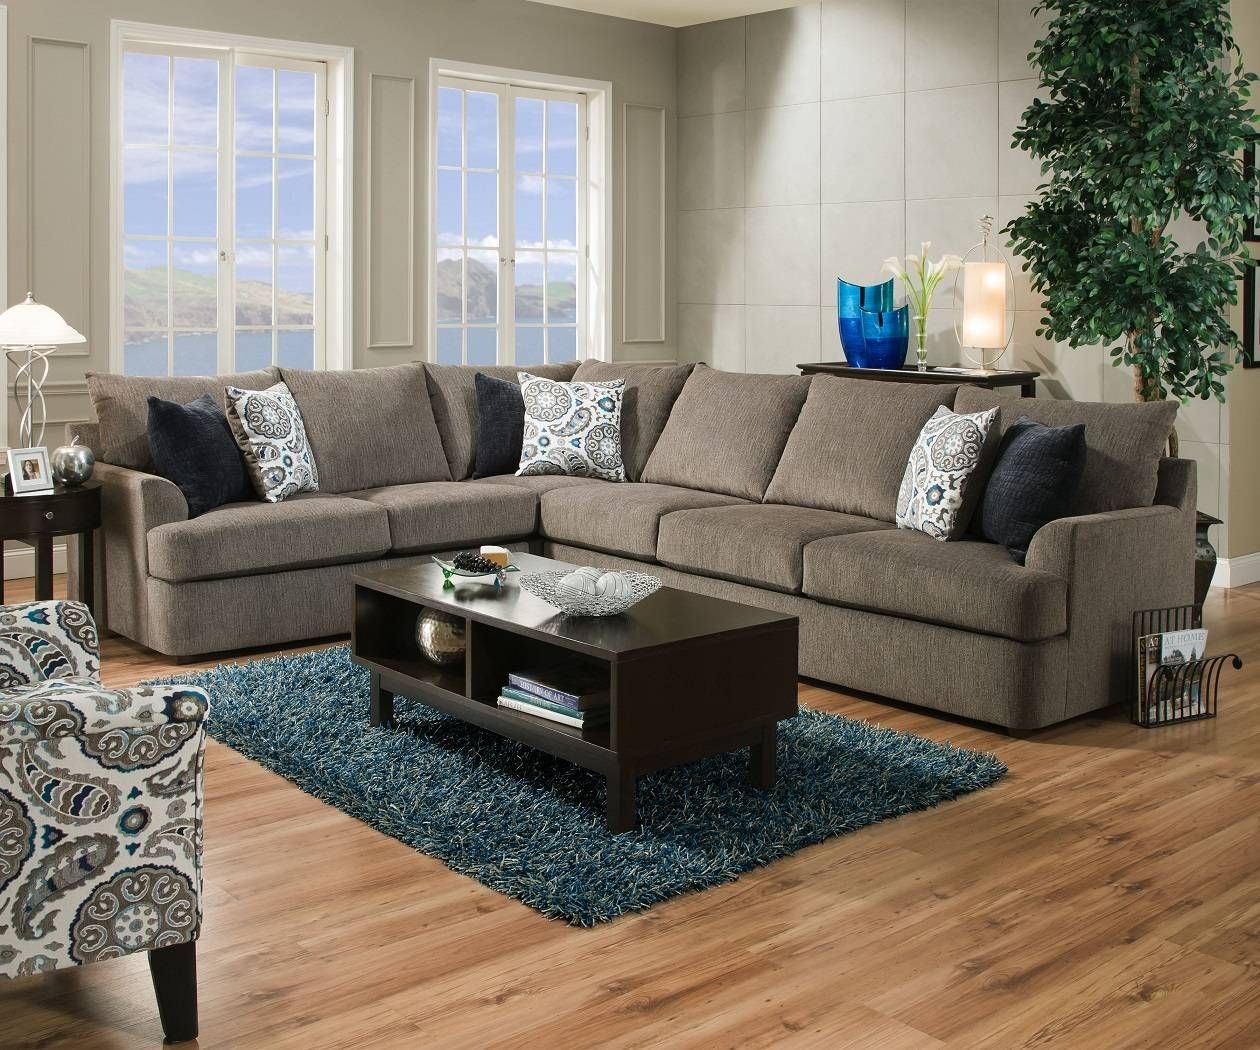 Sofa : Leather Sofas Orange County Home Design Great Luxury To Regarding Sofa Orange County (View 16 of 25)